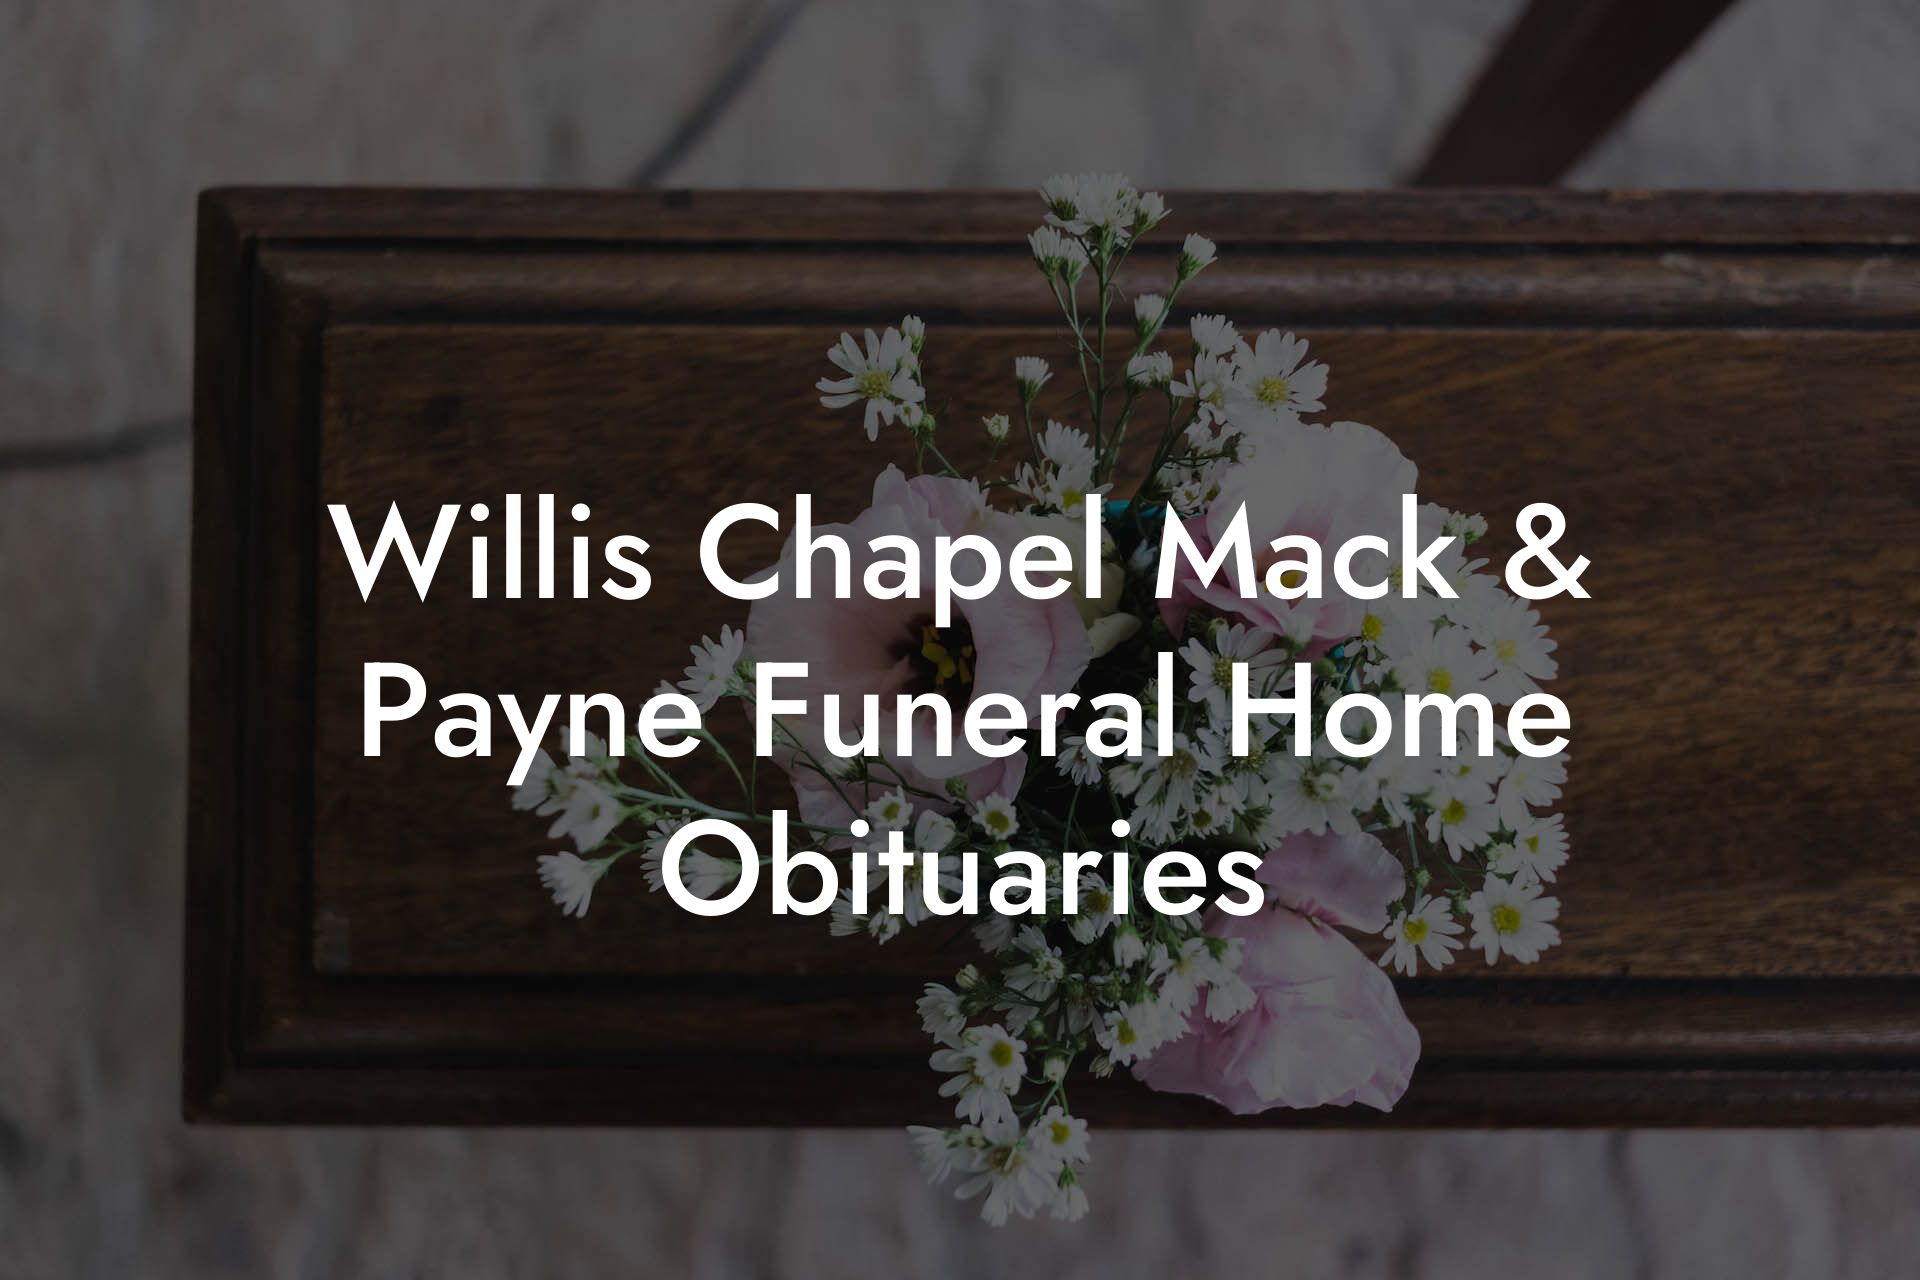 Willis Chapel Mack & Payne Funeral Home Obituaries